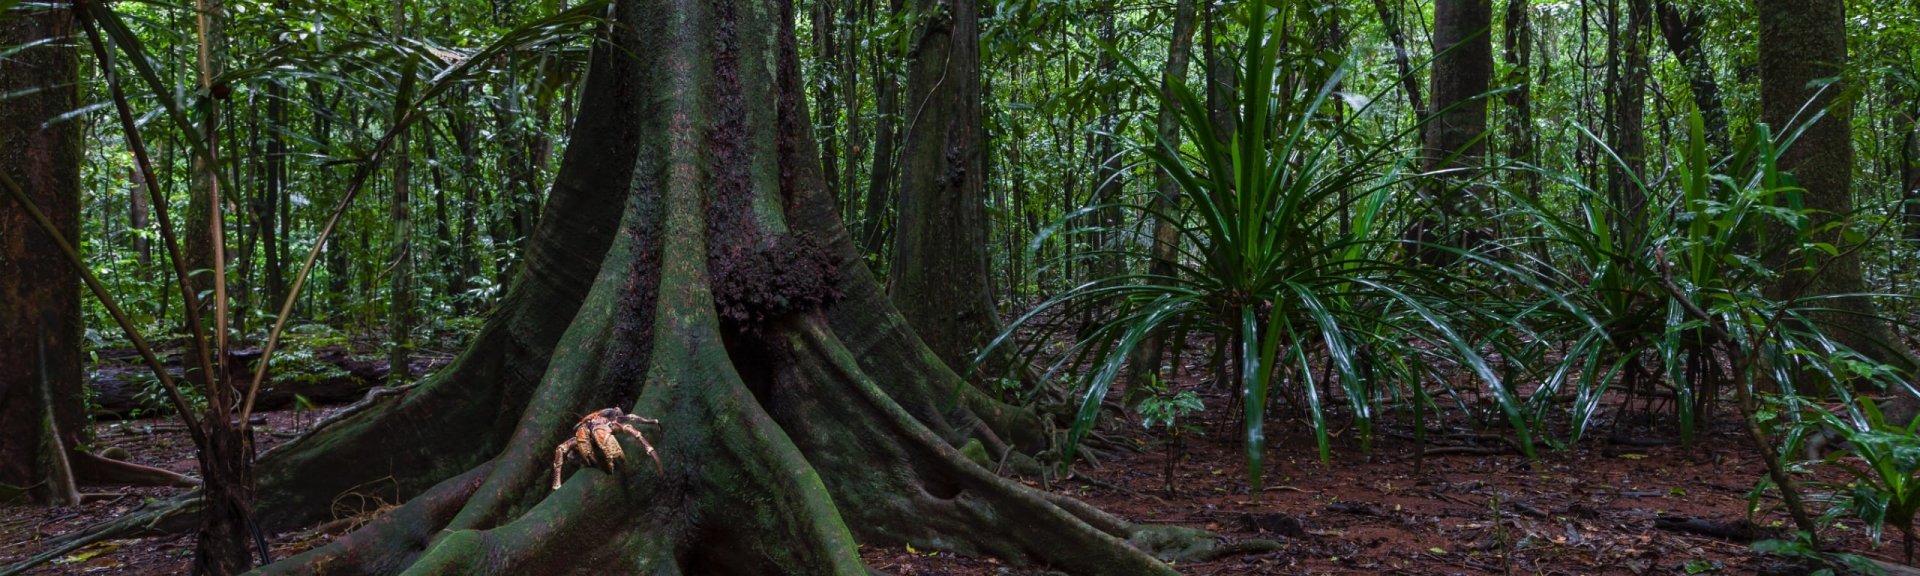 Robber crab in the rainforest. Photo: [Wondrous World Images](https://www.wondrousworldimages.com.au)